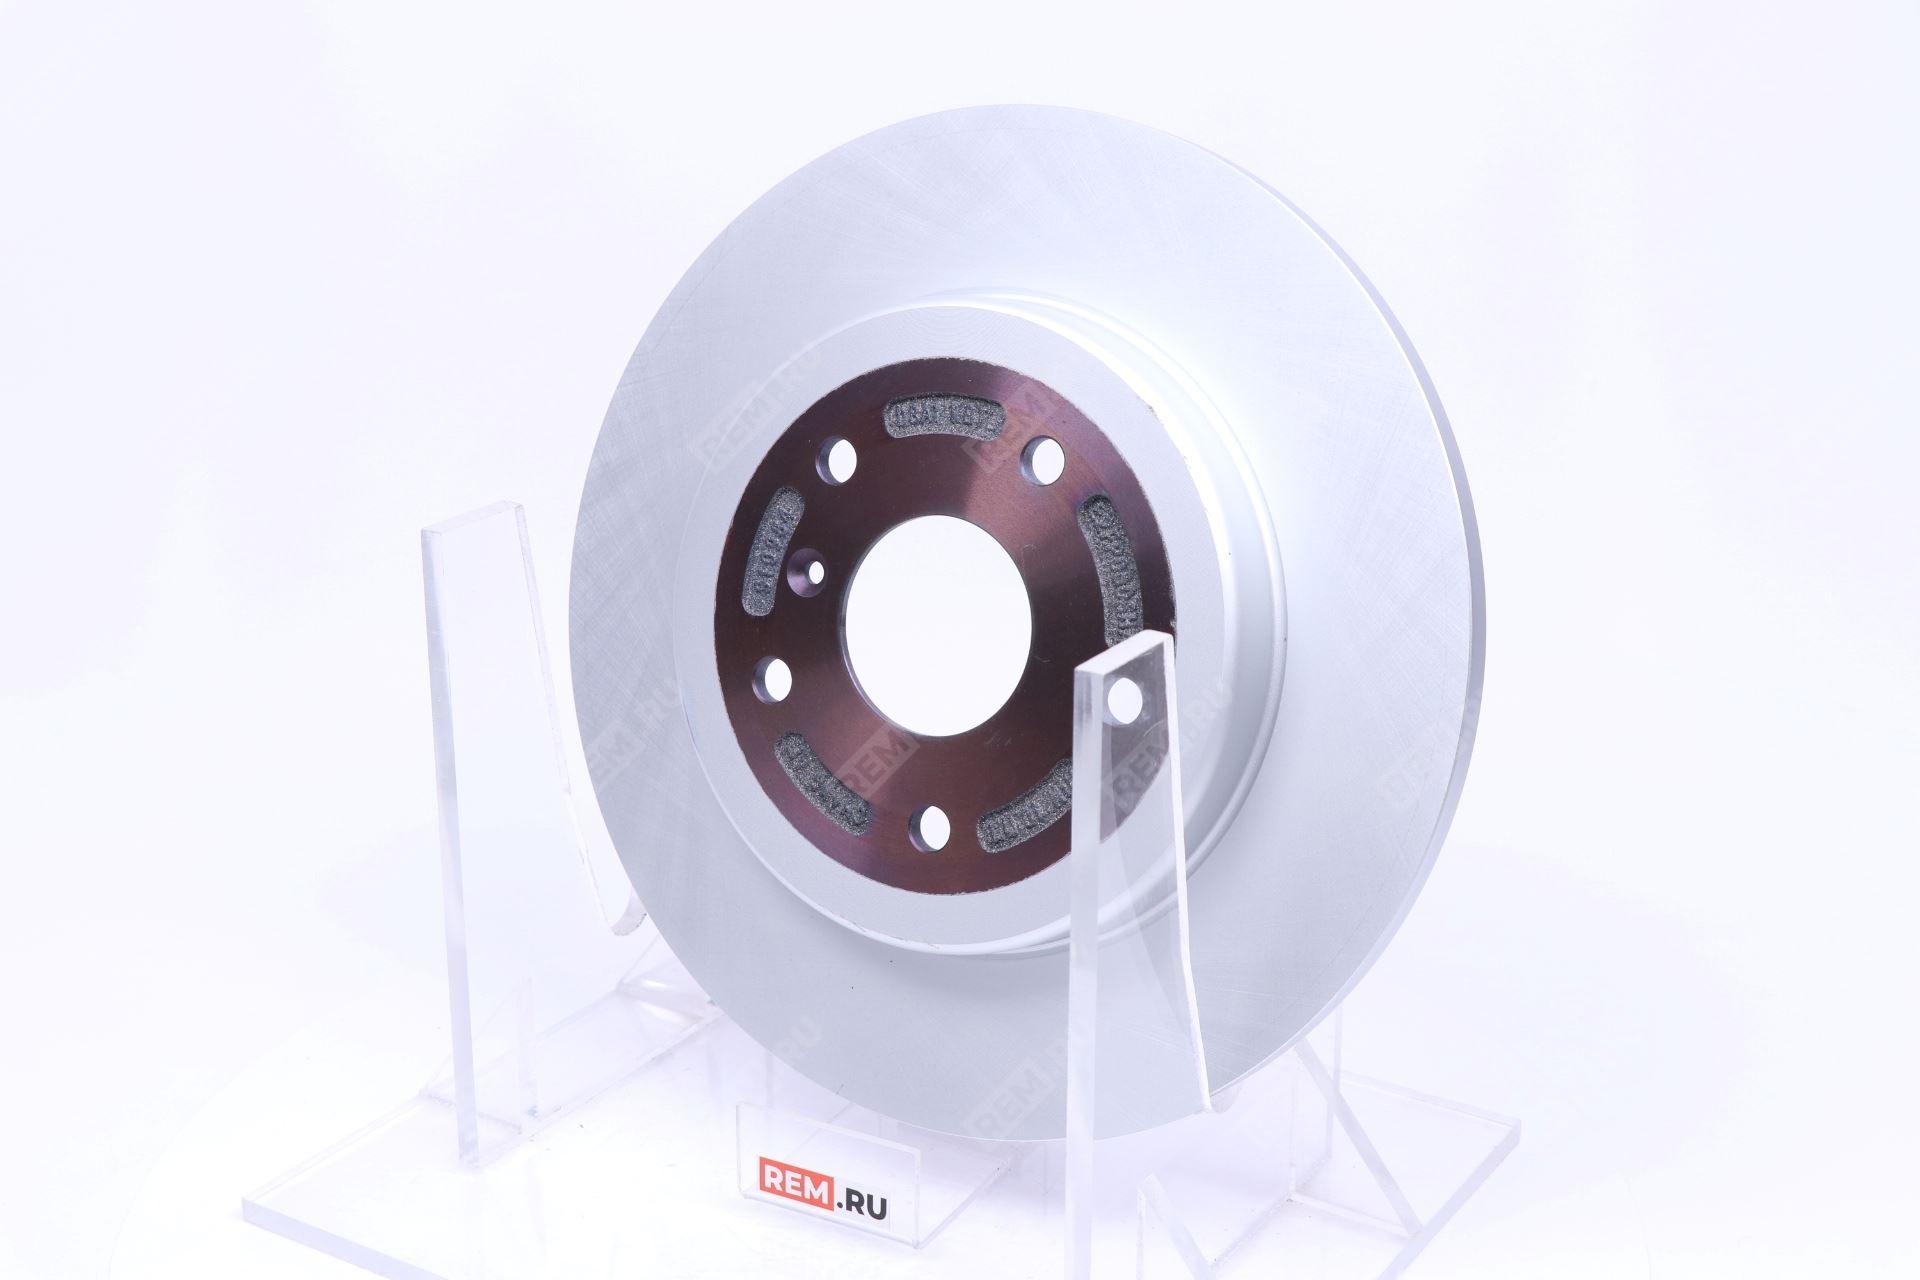  S301067-0200-AB диск тормозной задний